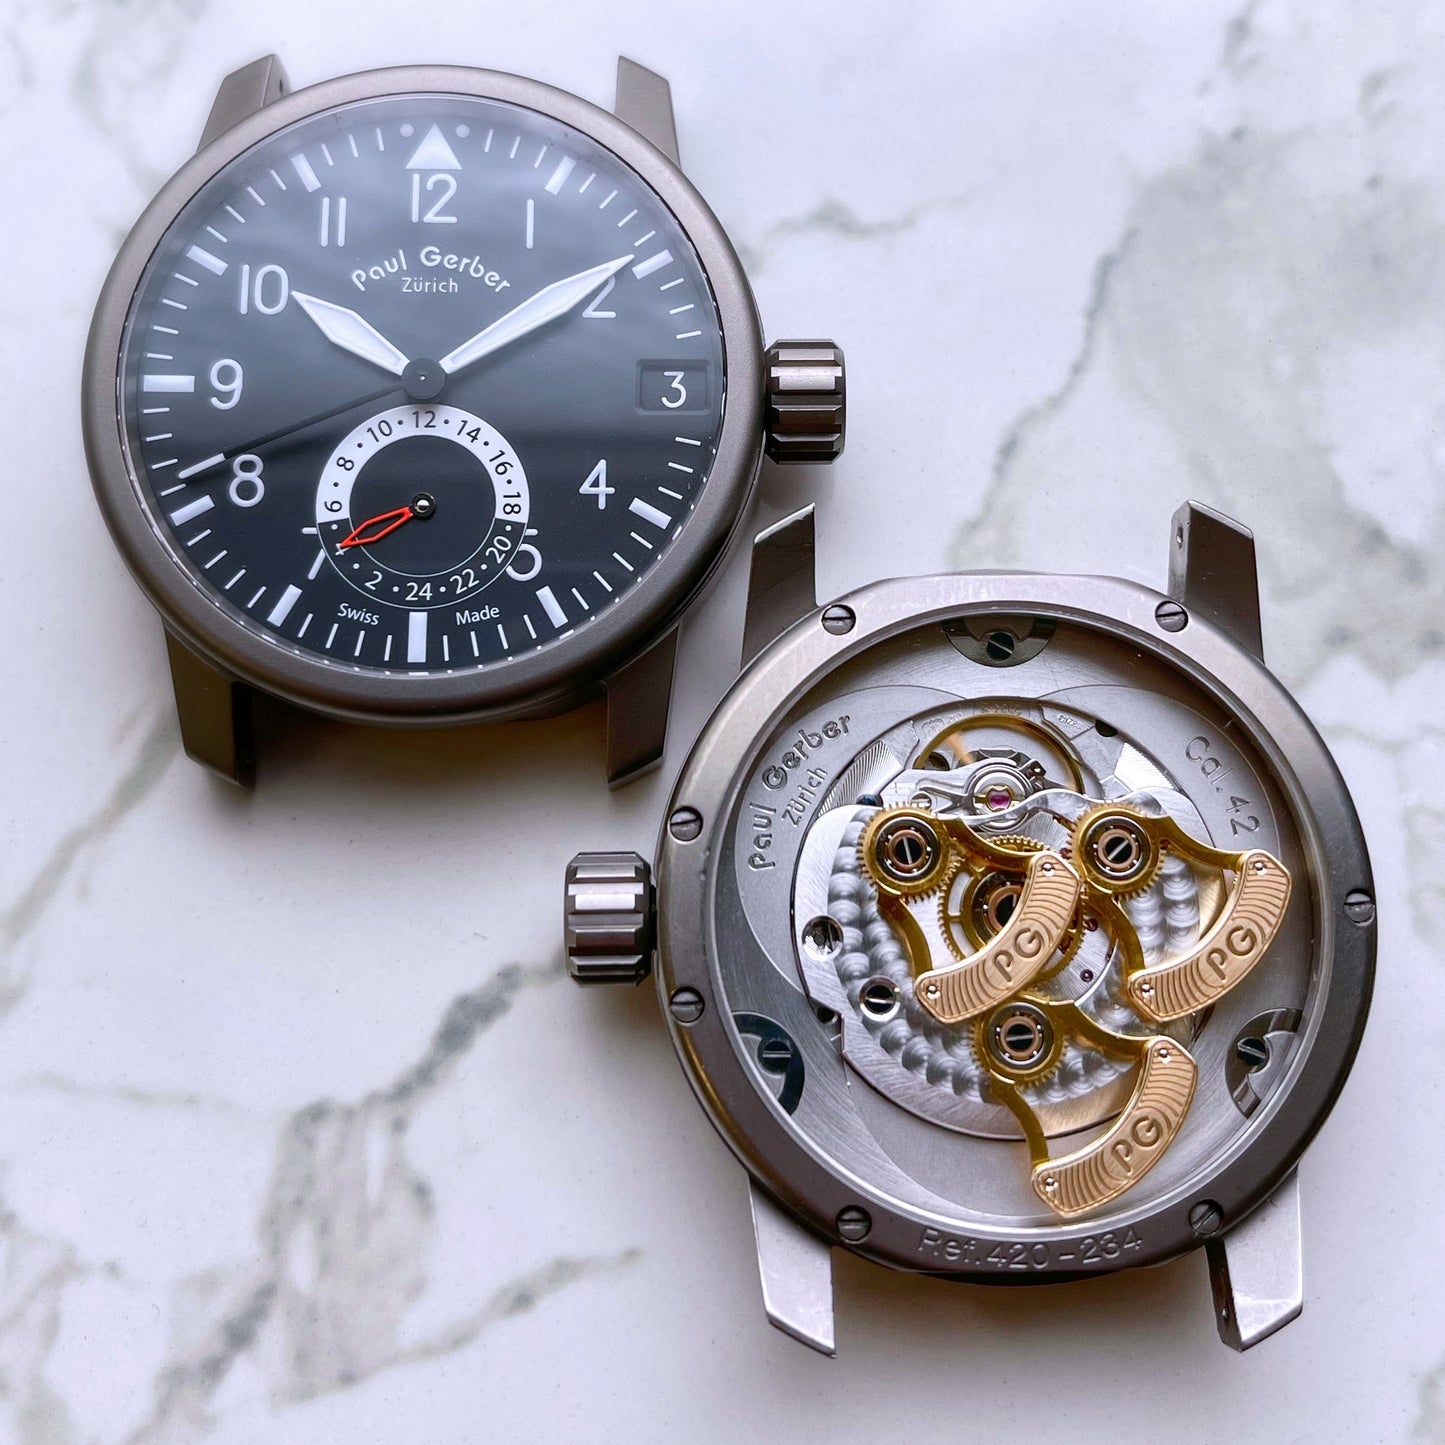 Paul Gerber Model 42 Pilot Dual Time watch